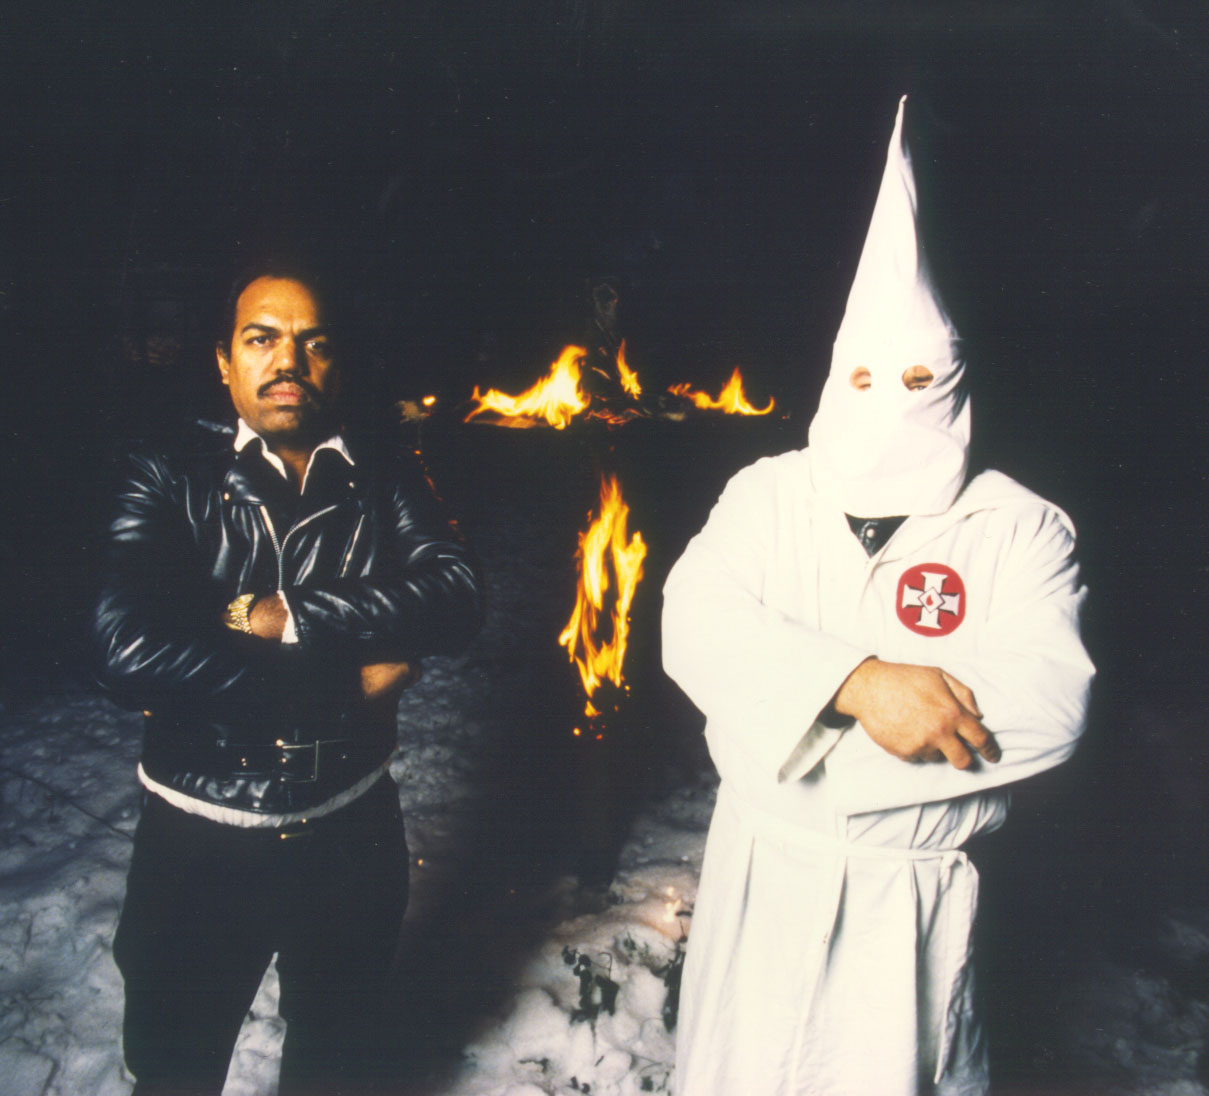 Copy of DD At Klan Rally in Maryland.jpeg